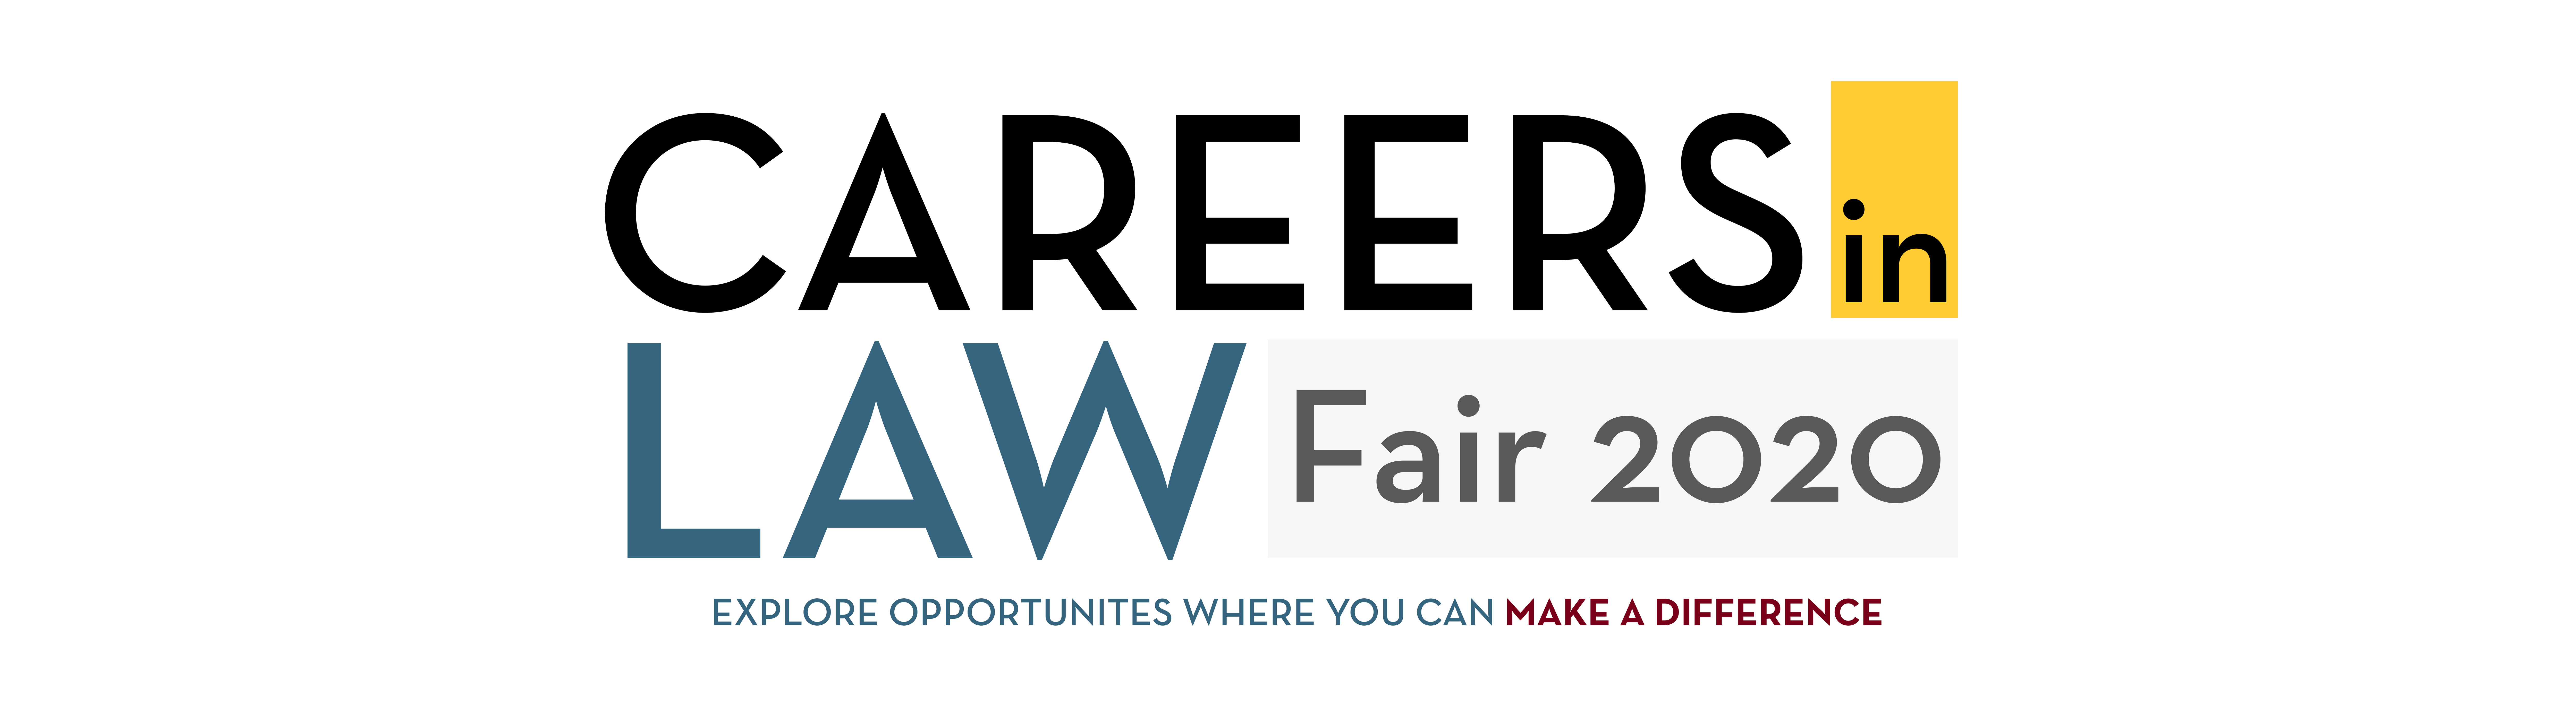 Careers in Law Fair 2020 Image